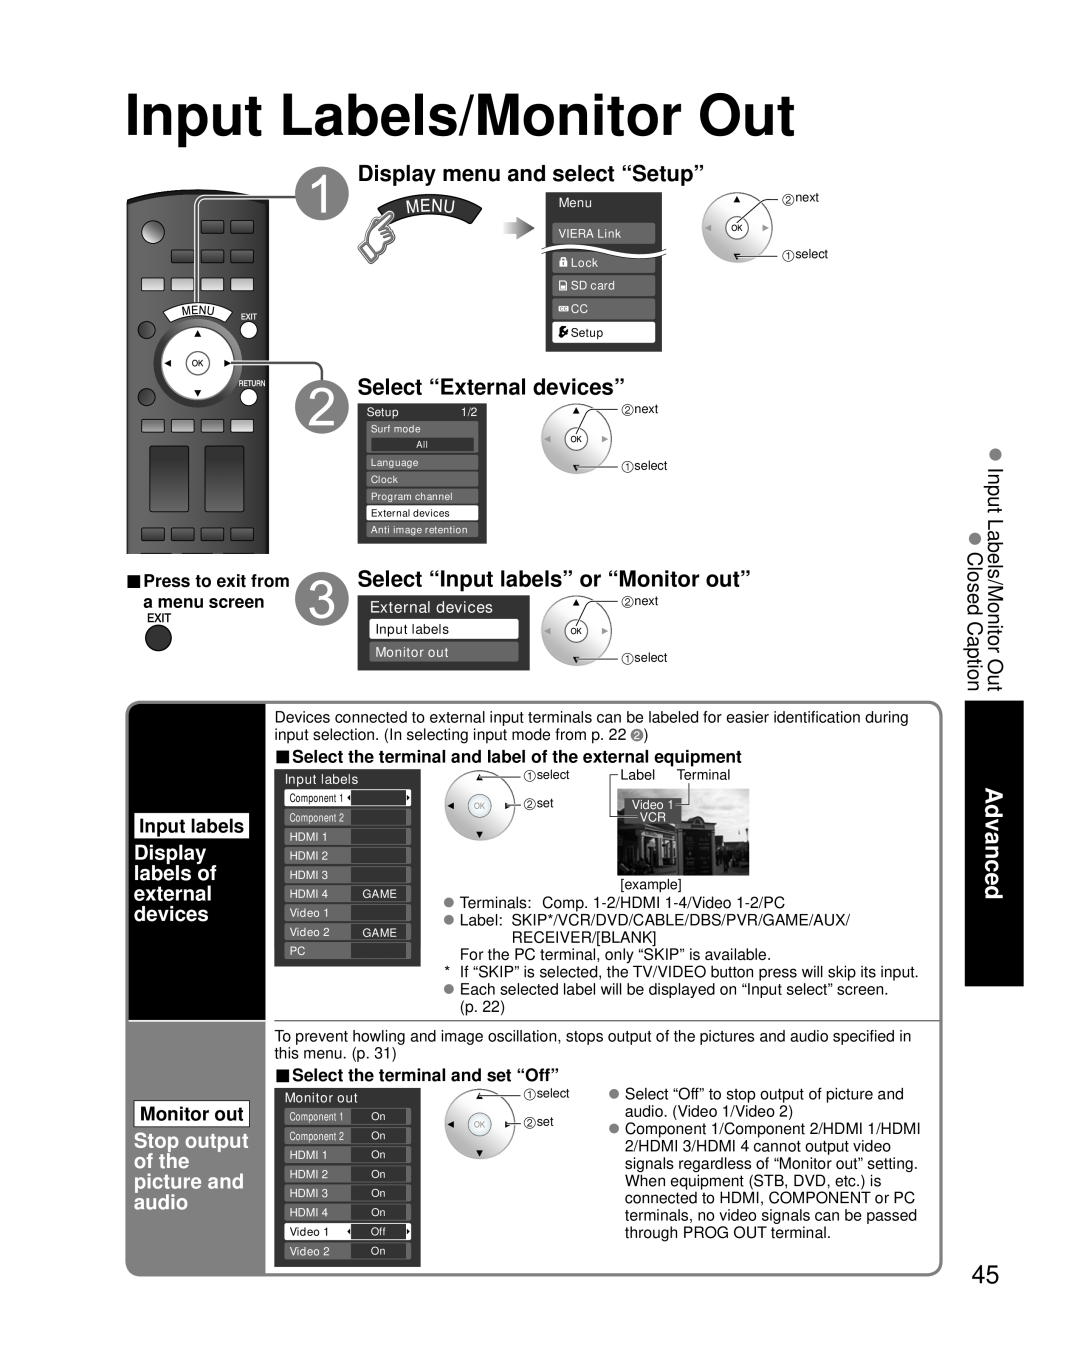 Panasonic TH 65PZ850U Input Labels/Monitor Out, Display menu and select “Setup”, Select “External devices”, Input labels 